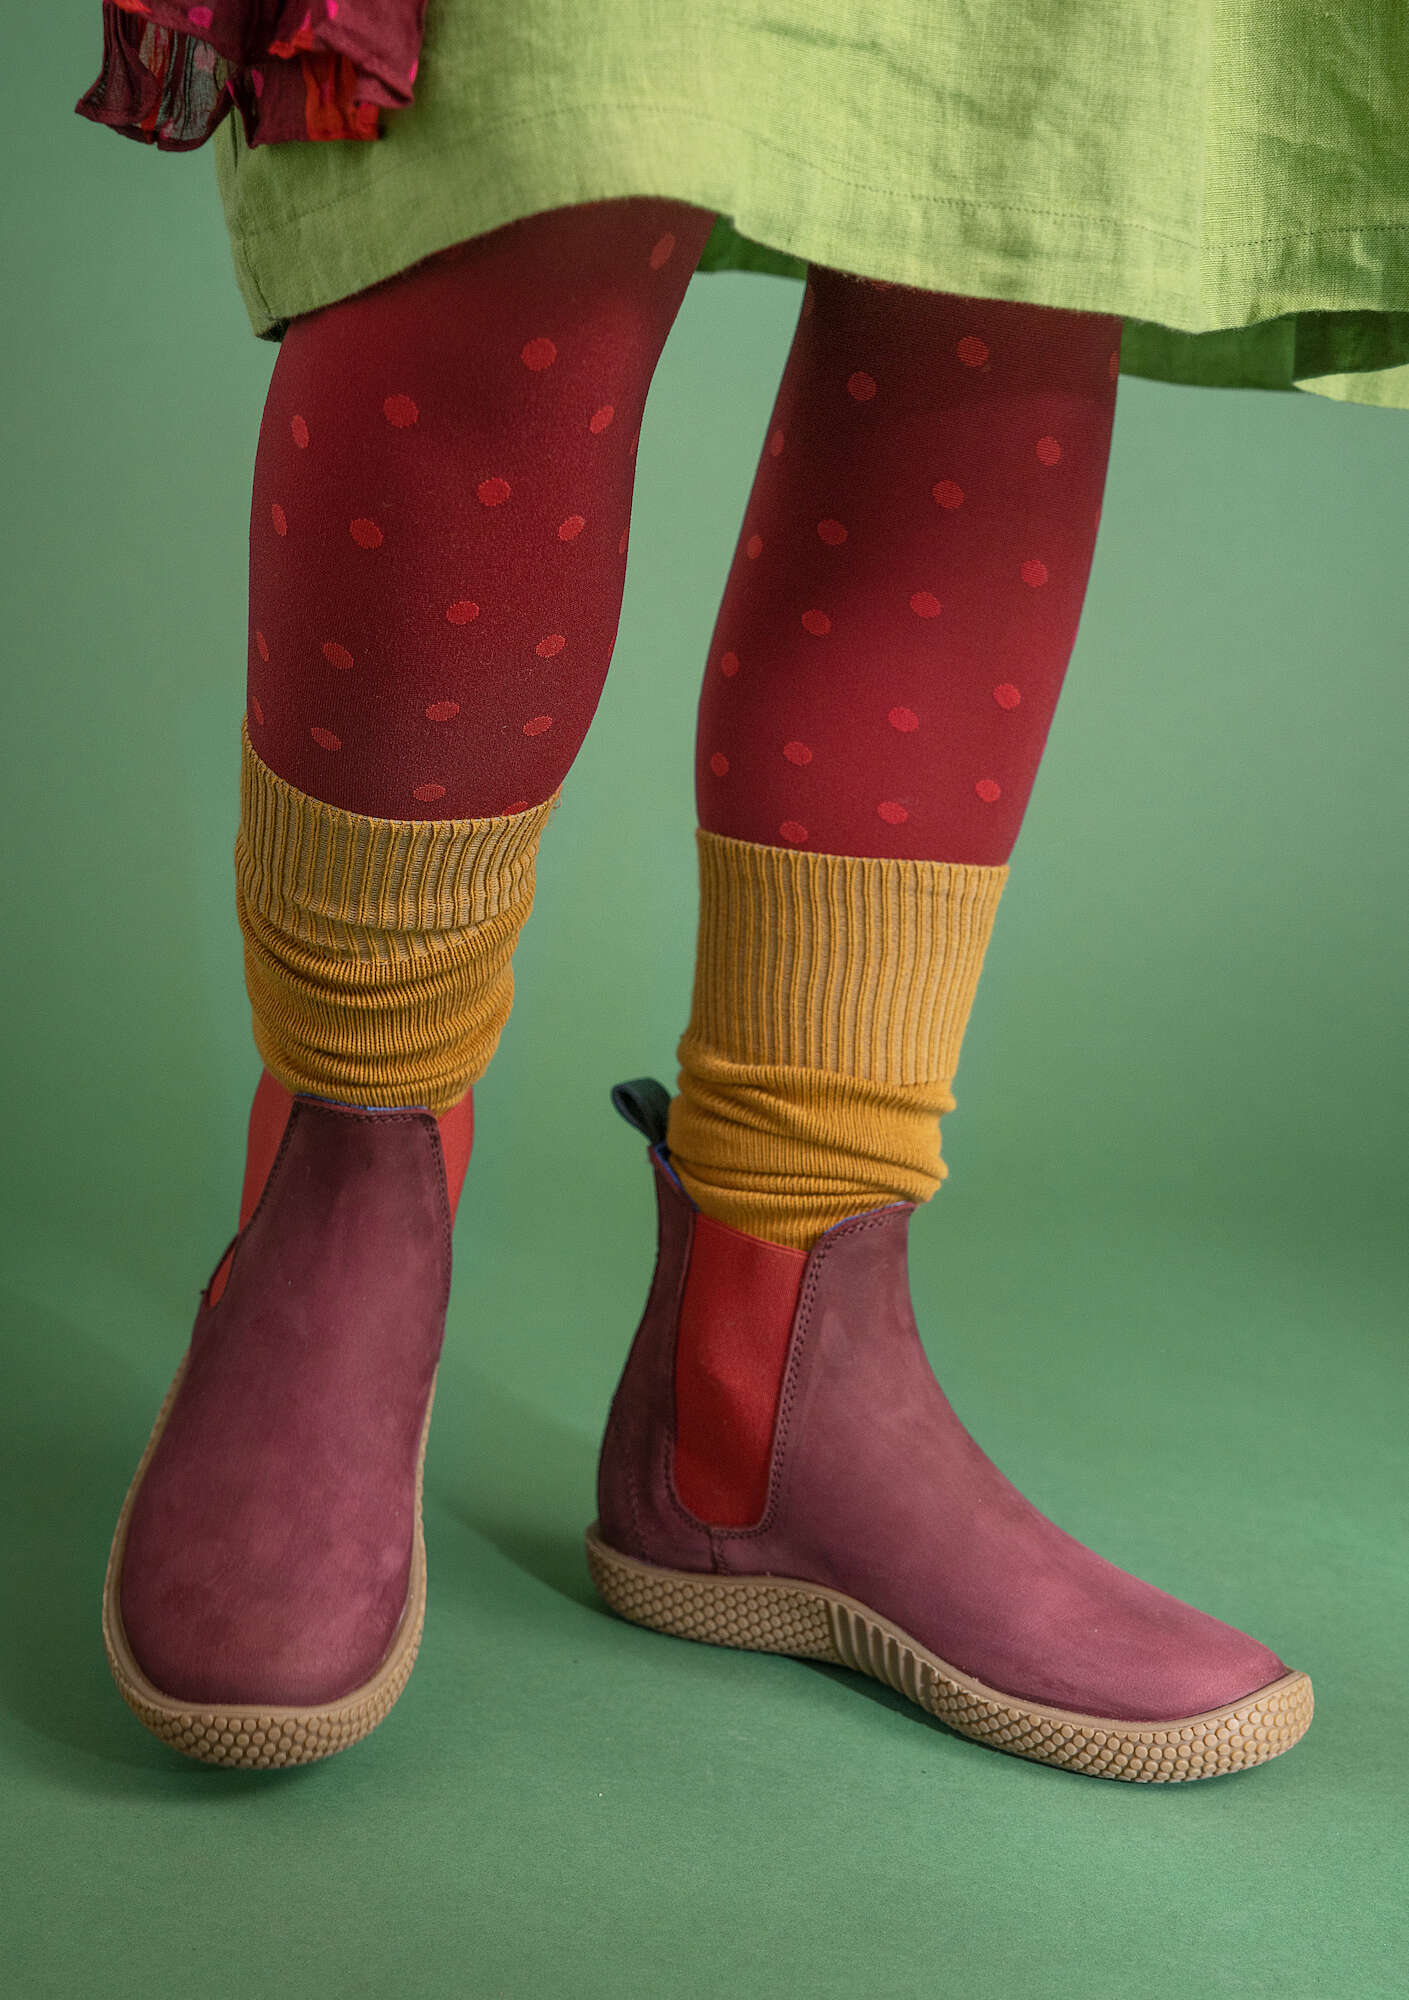 Elastic-sided boots made of nubuck burgundy